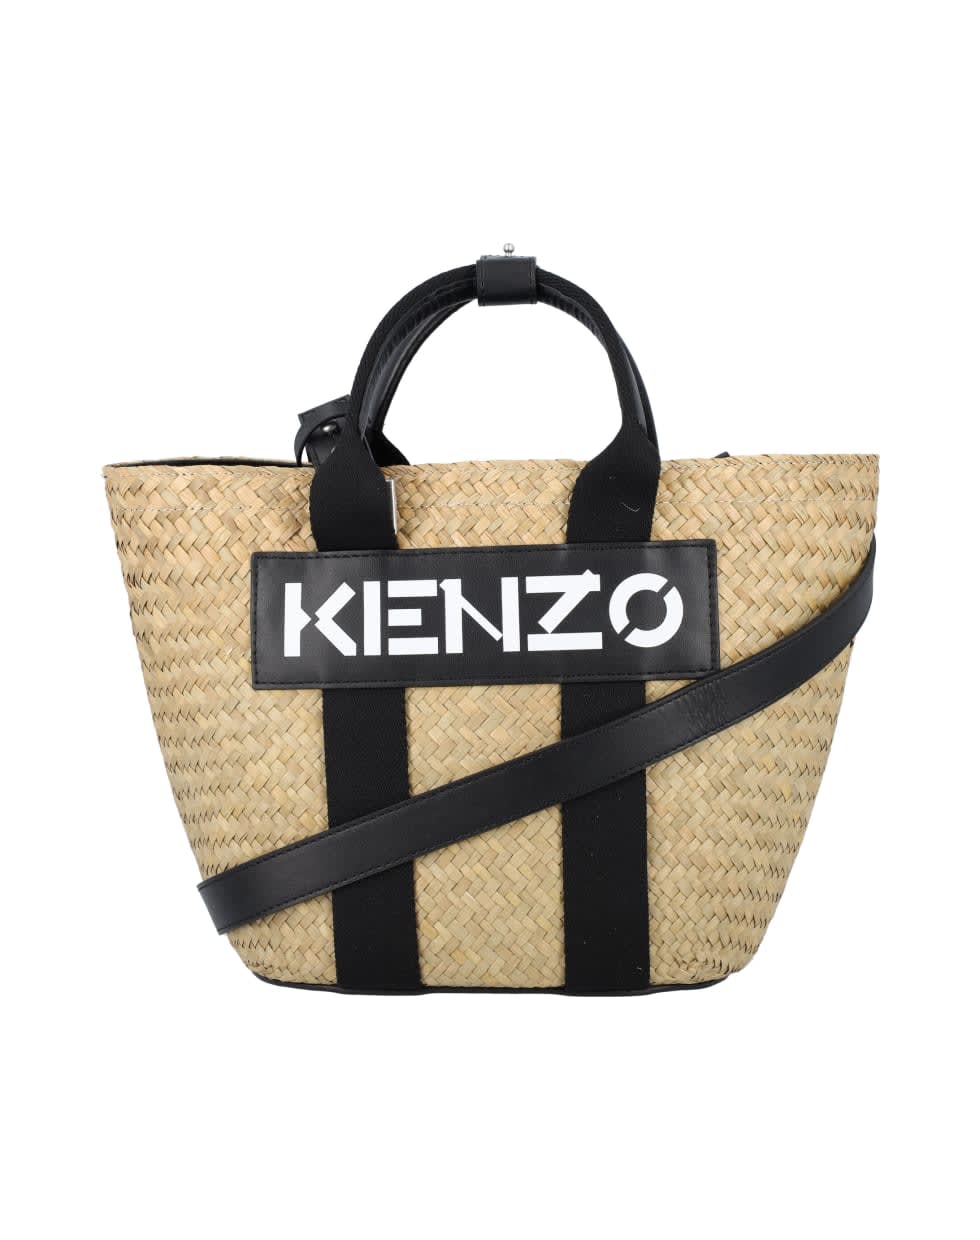 Kenzo Small Basket